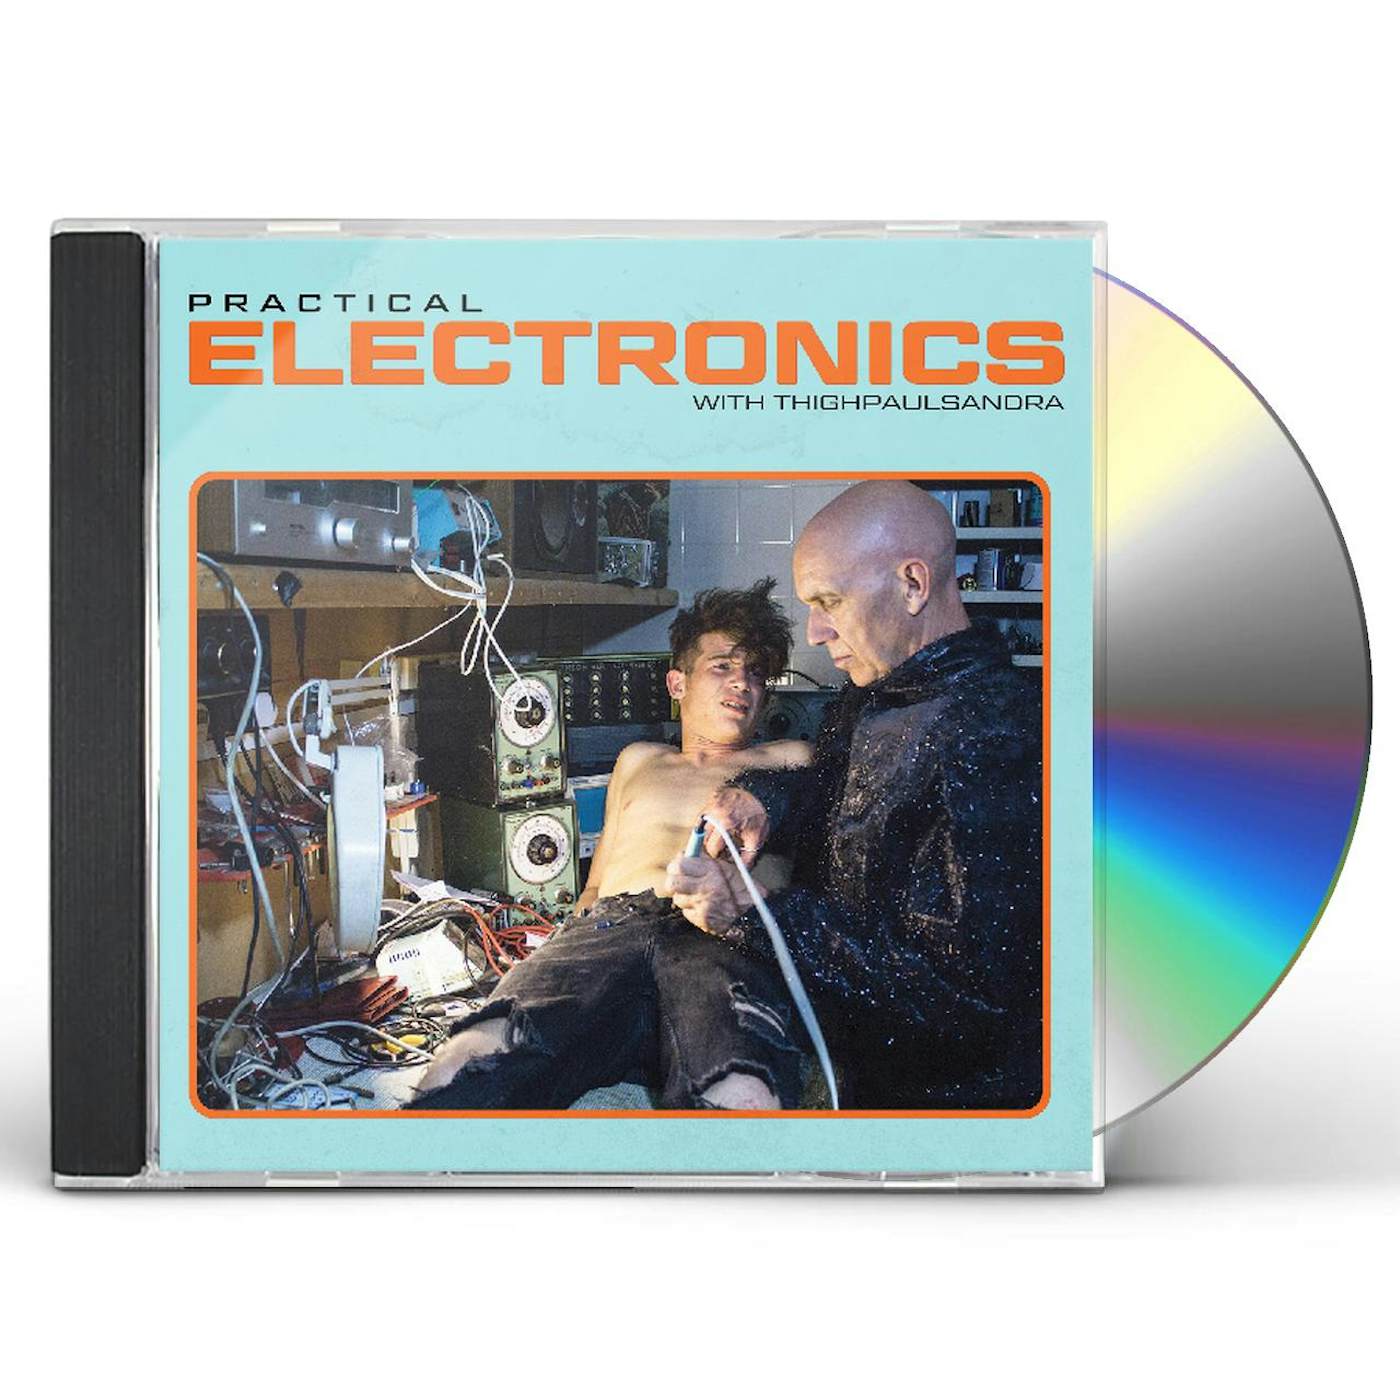 PRACTICAL ELECTRONICS WITH THIGHPAULSANDRA CD